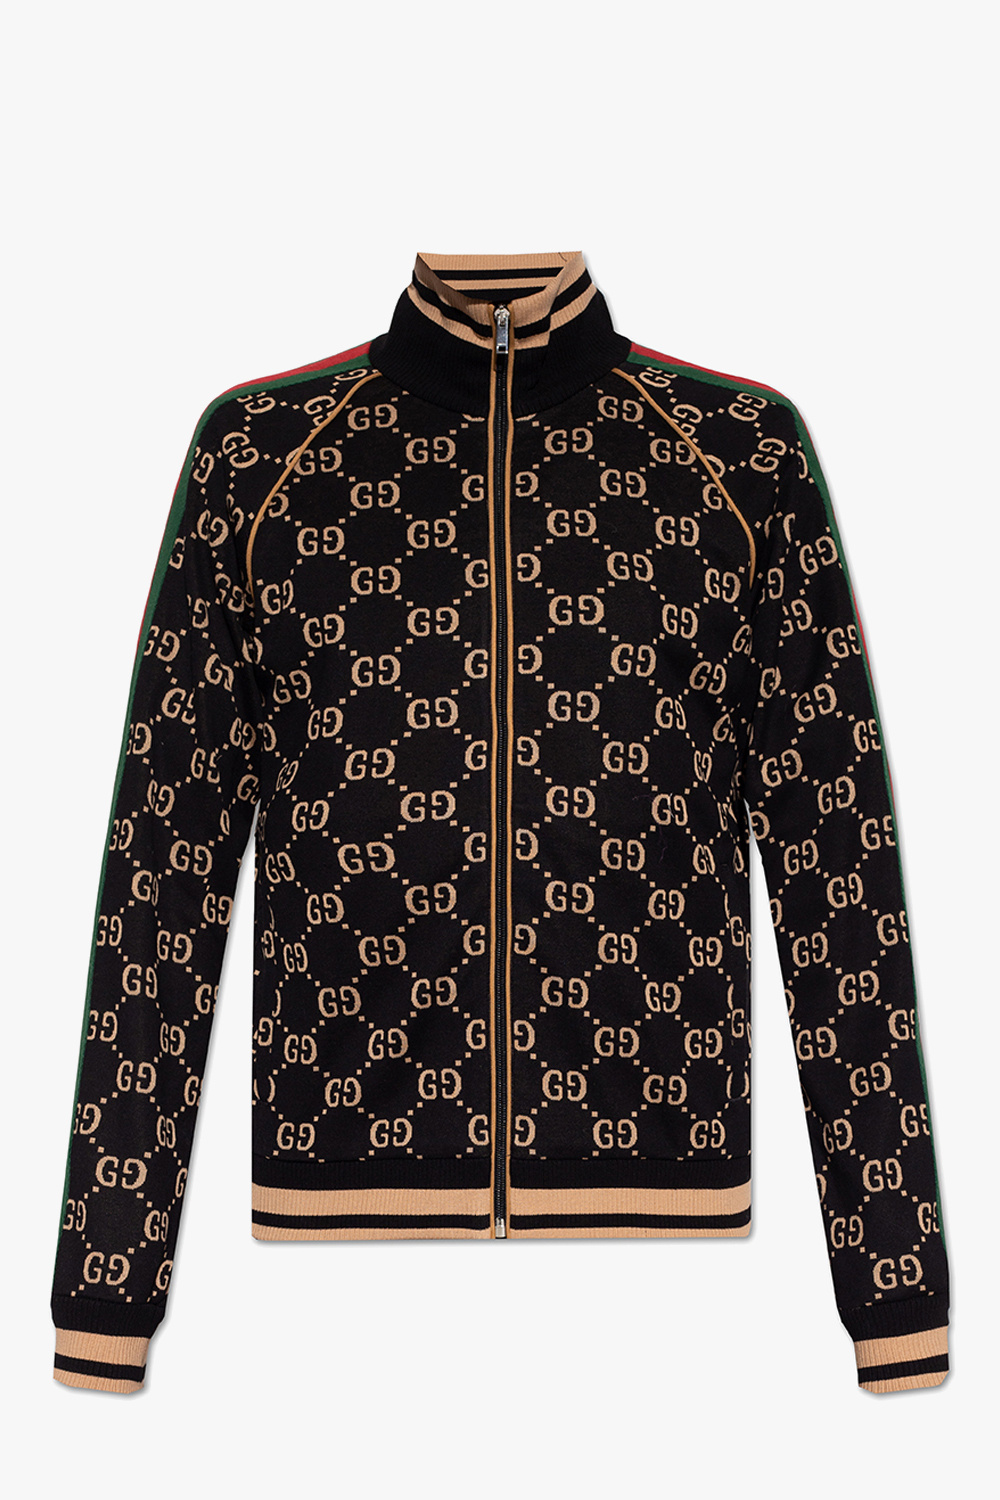 Gucci Sweatshirt with standing collar | Men's Clothing | Vitkac